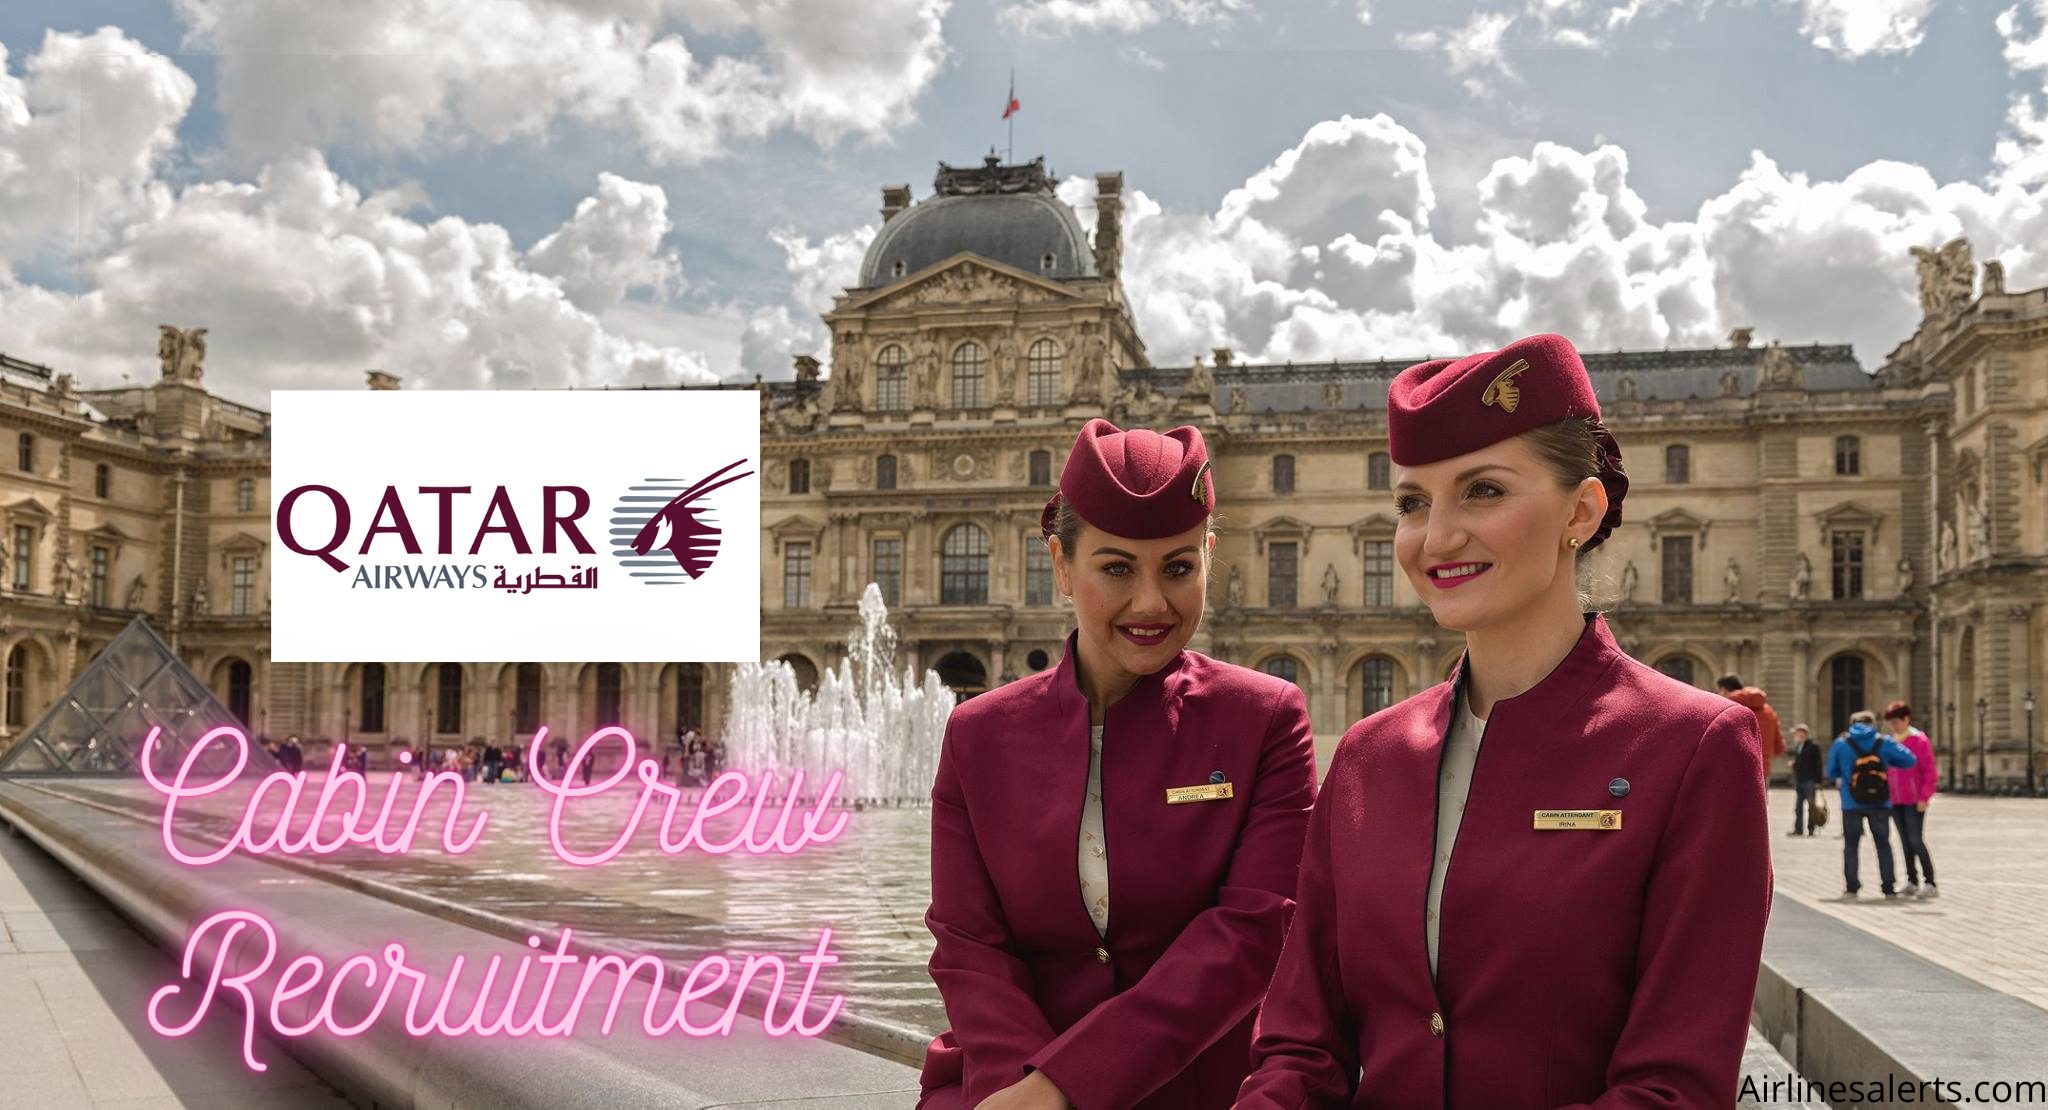 Qatar Airways Cabin Crew Recruitment Paris (France) - Check Details & Apply 